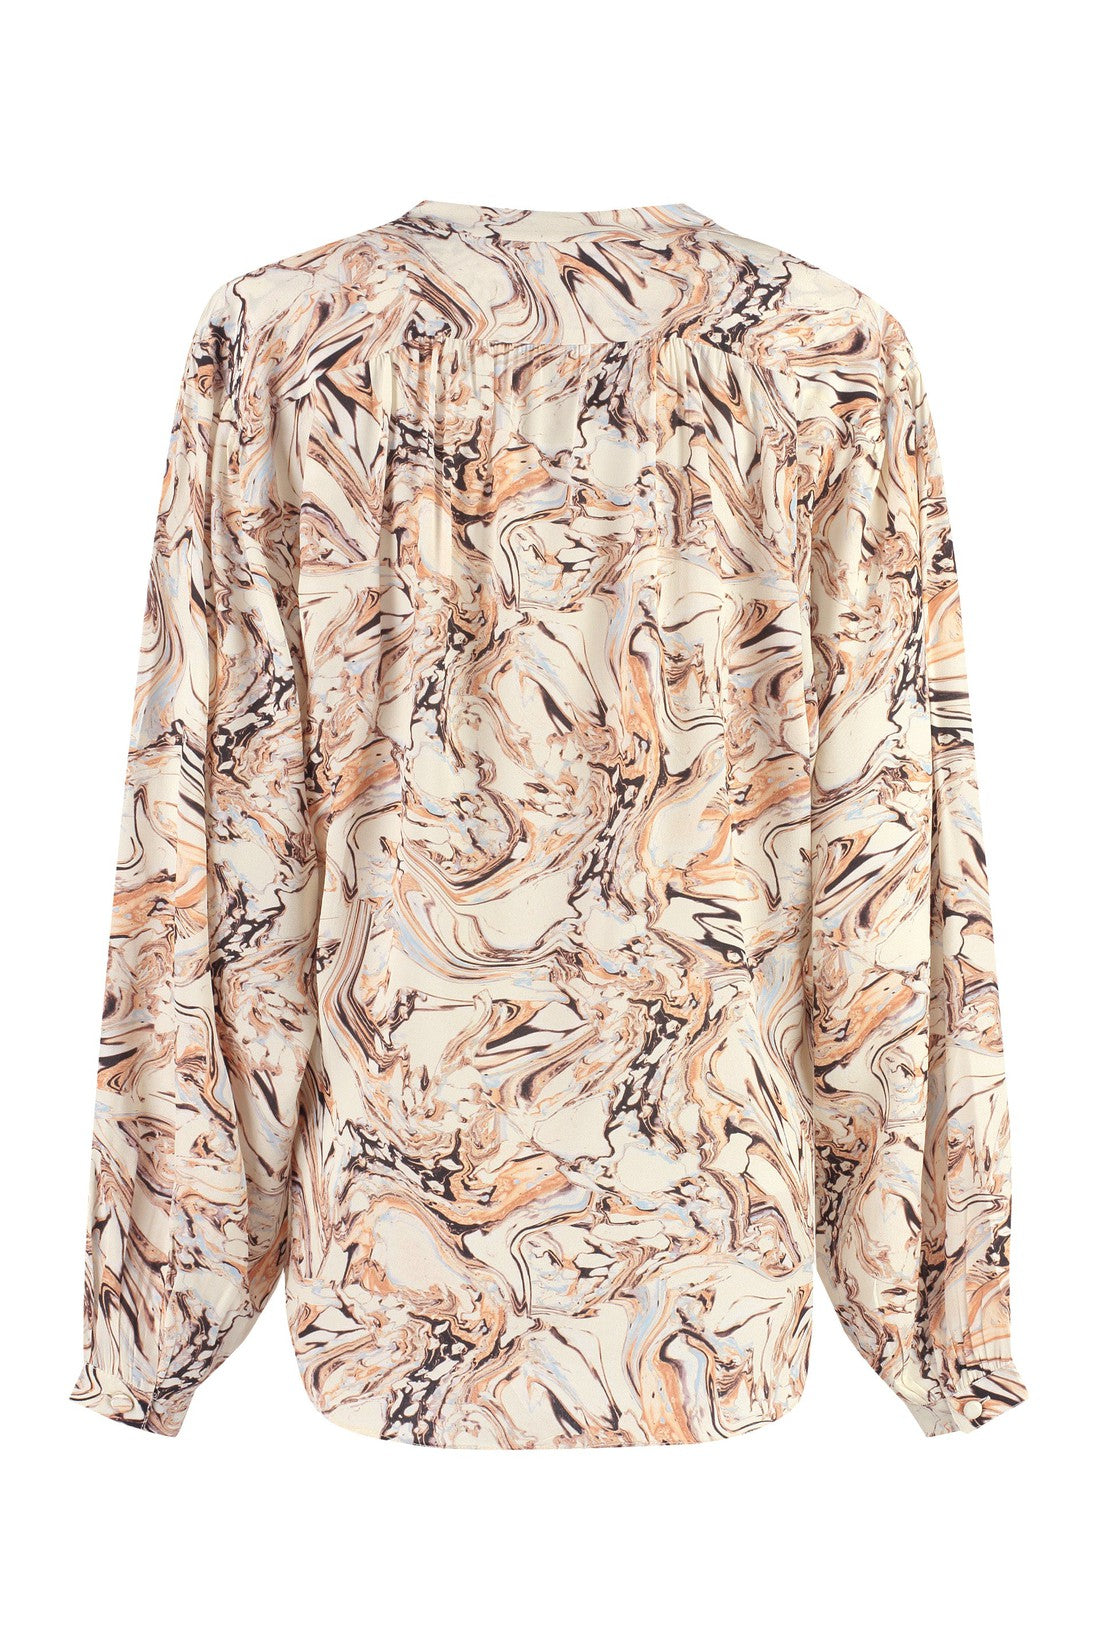 Isabel Marant-OUTLET-SALE-Tiphaine printed silk blouse-ARCHIVIST